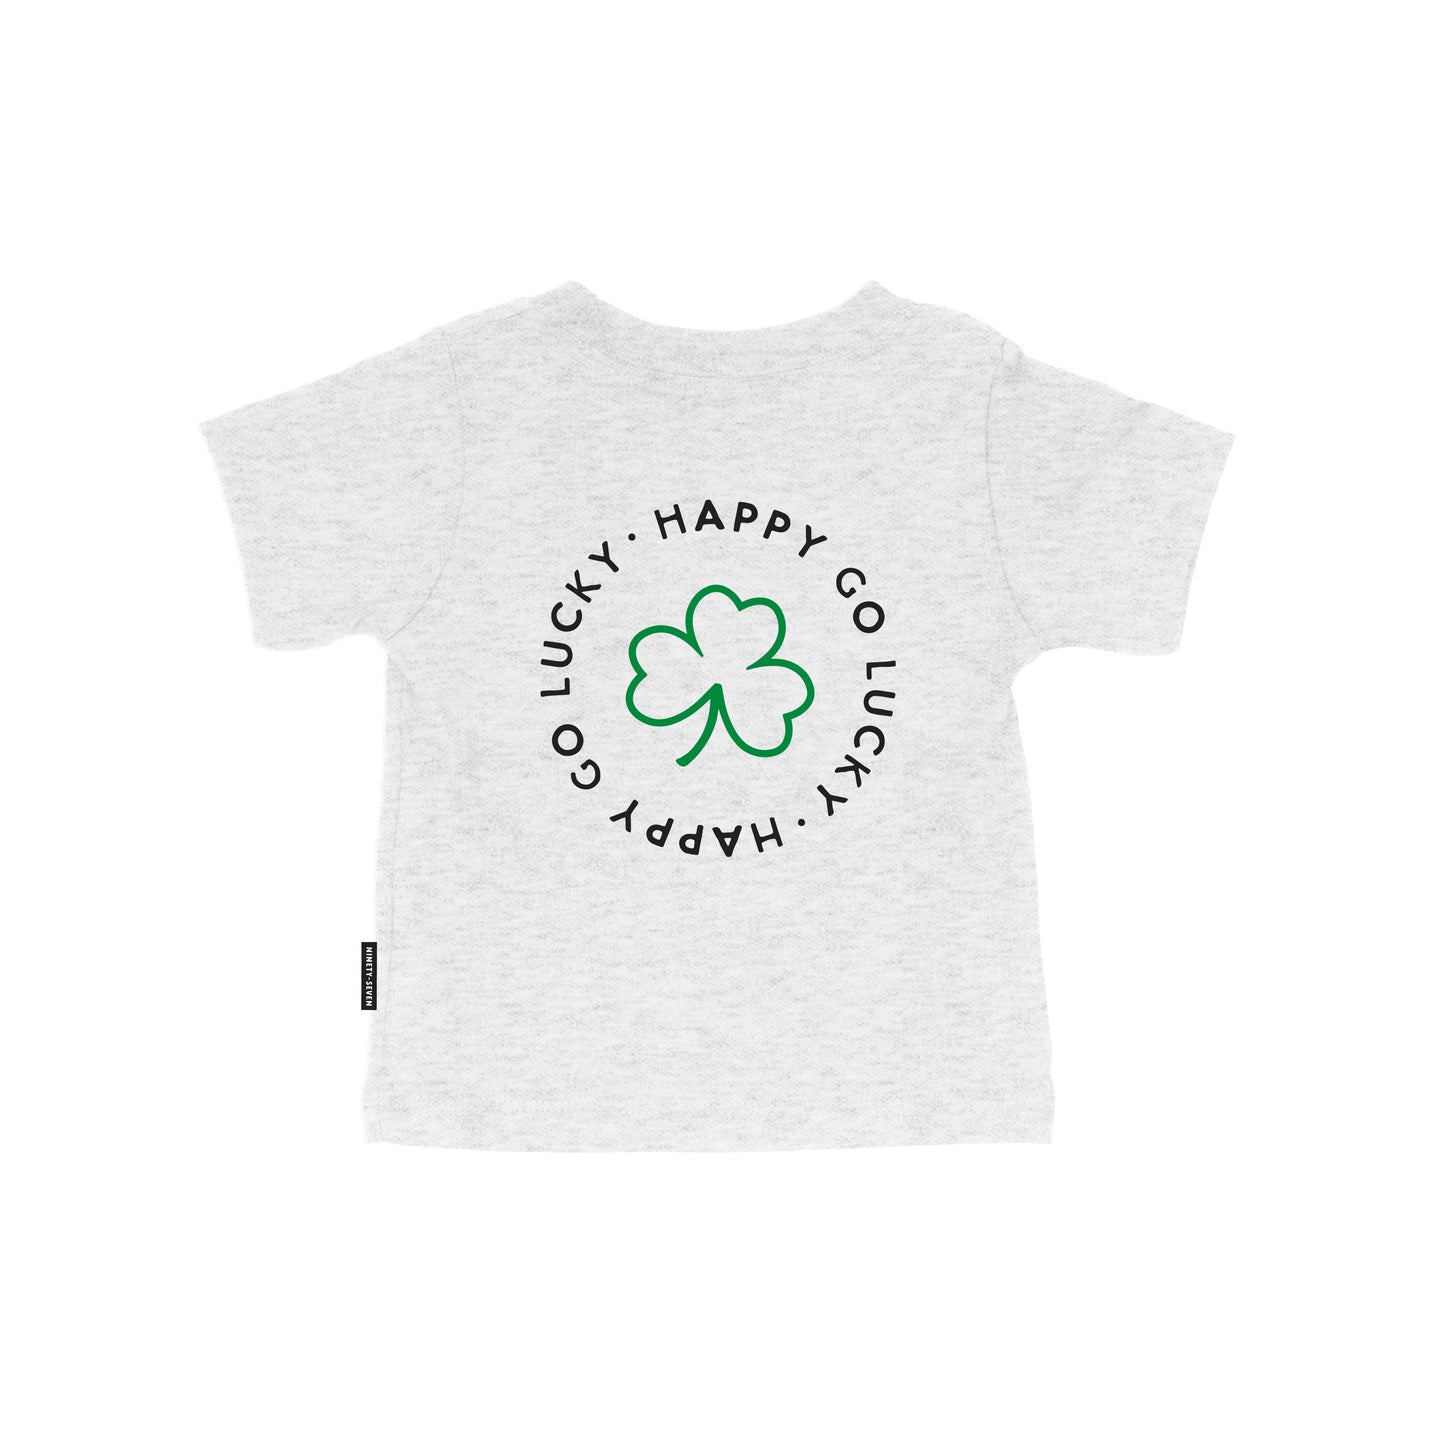 "Happy Go Lucky" St. Patrick's Day Shirt